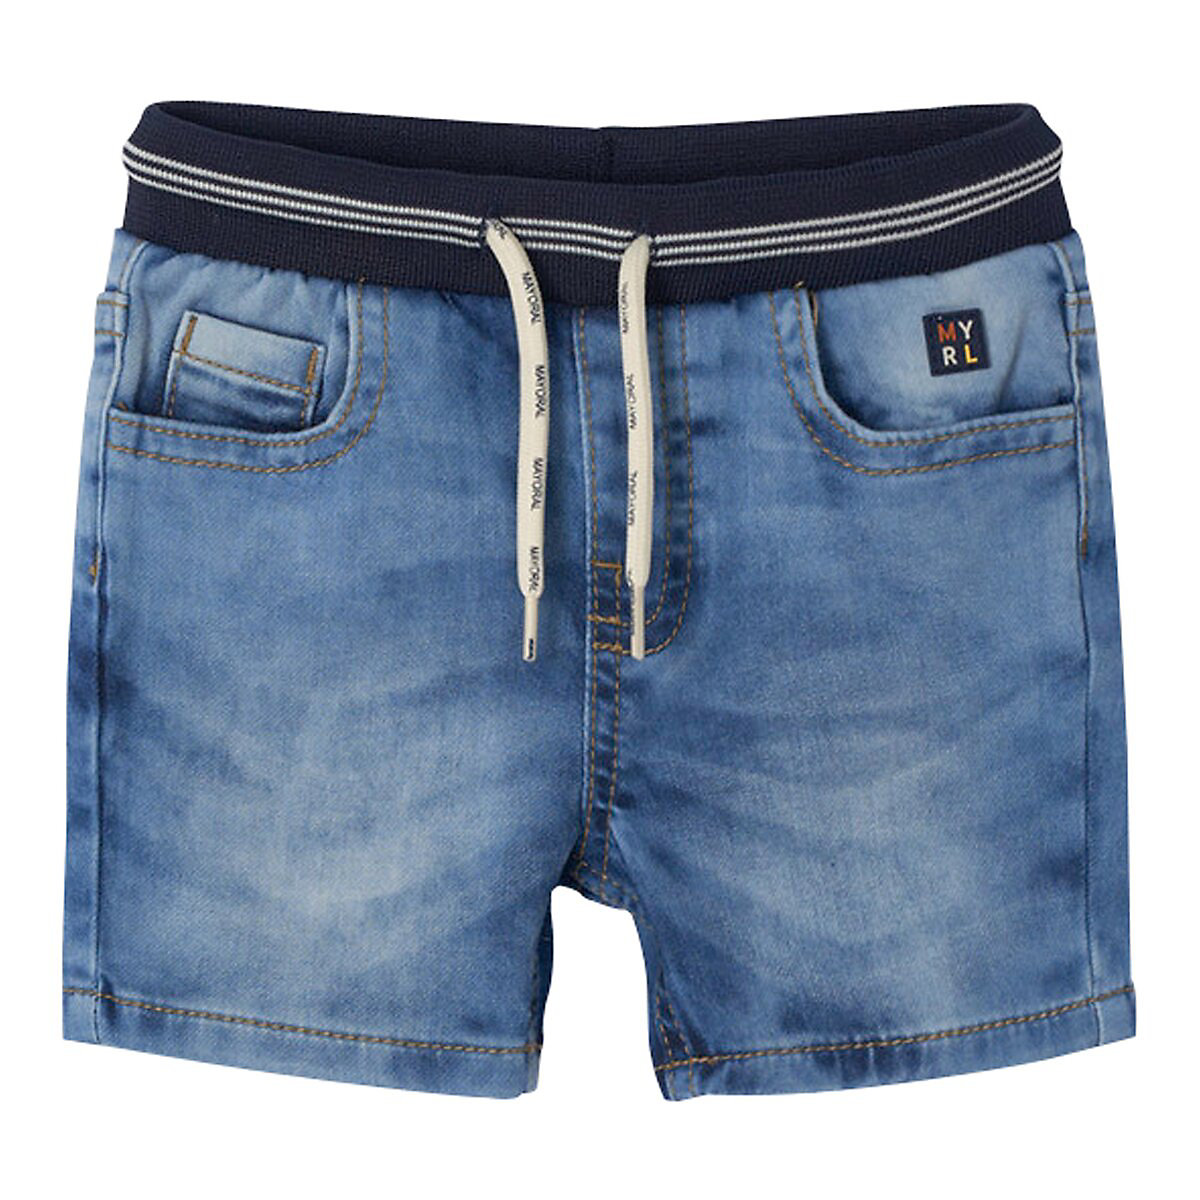 Mayoral Jeans-Shorts 5 Pocket Softbund